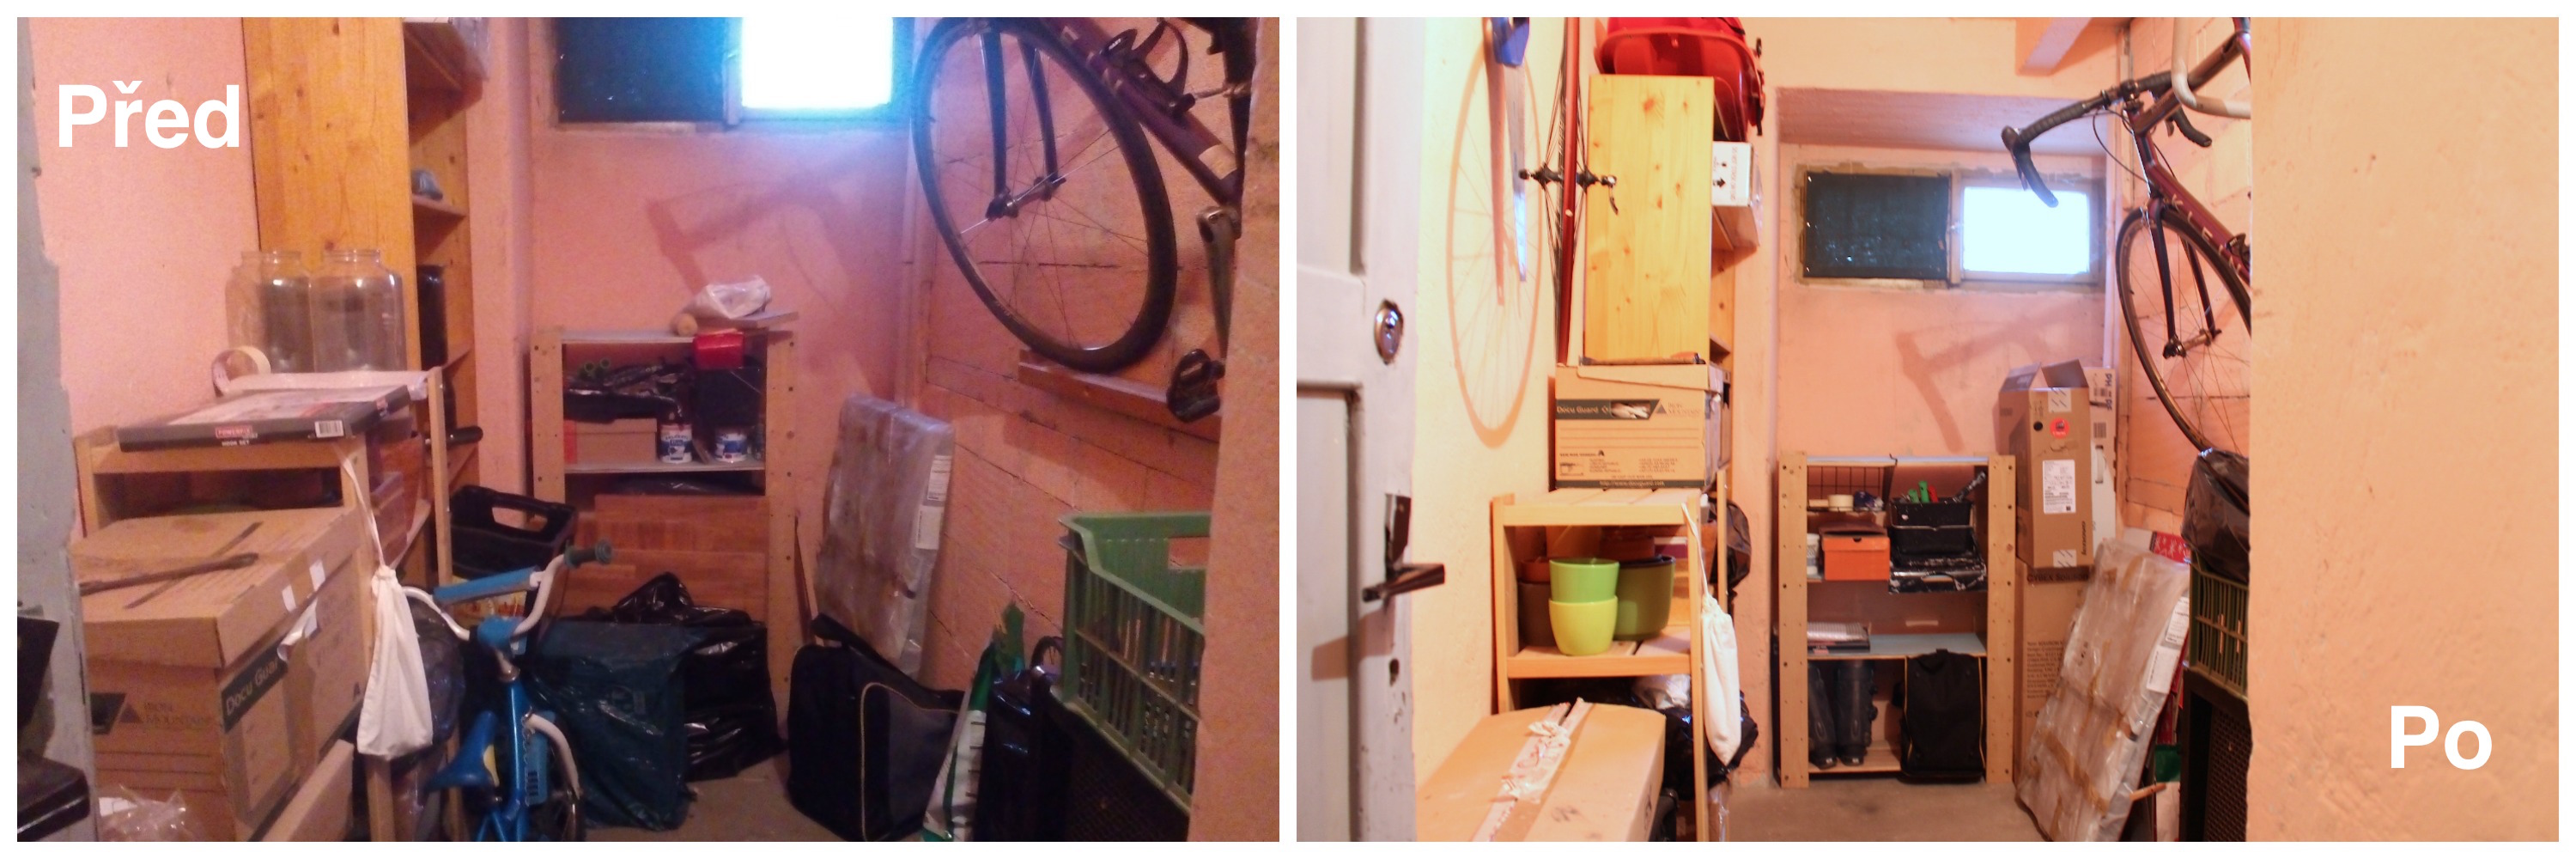 Úklid sklepa, před a po, Home Staging Praha, jarní úklid, pořádek